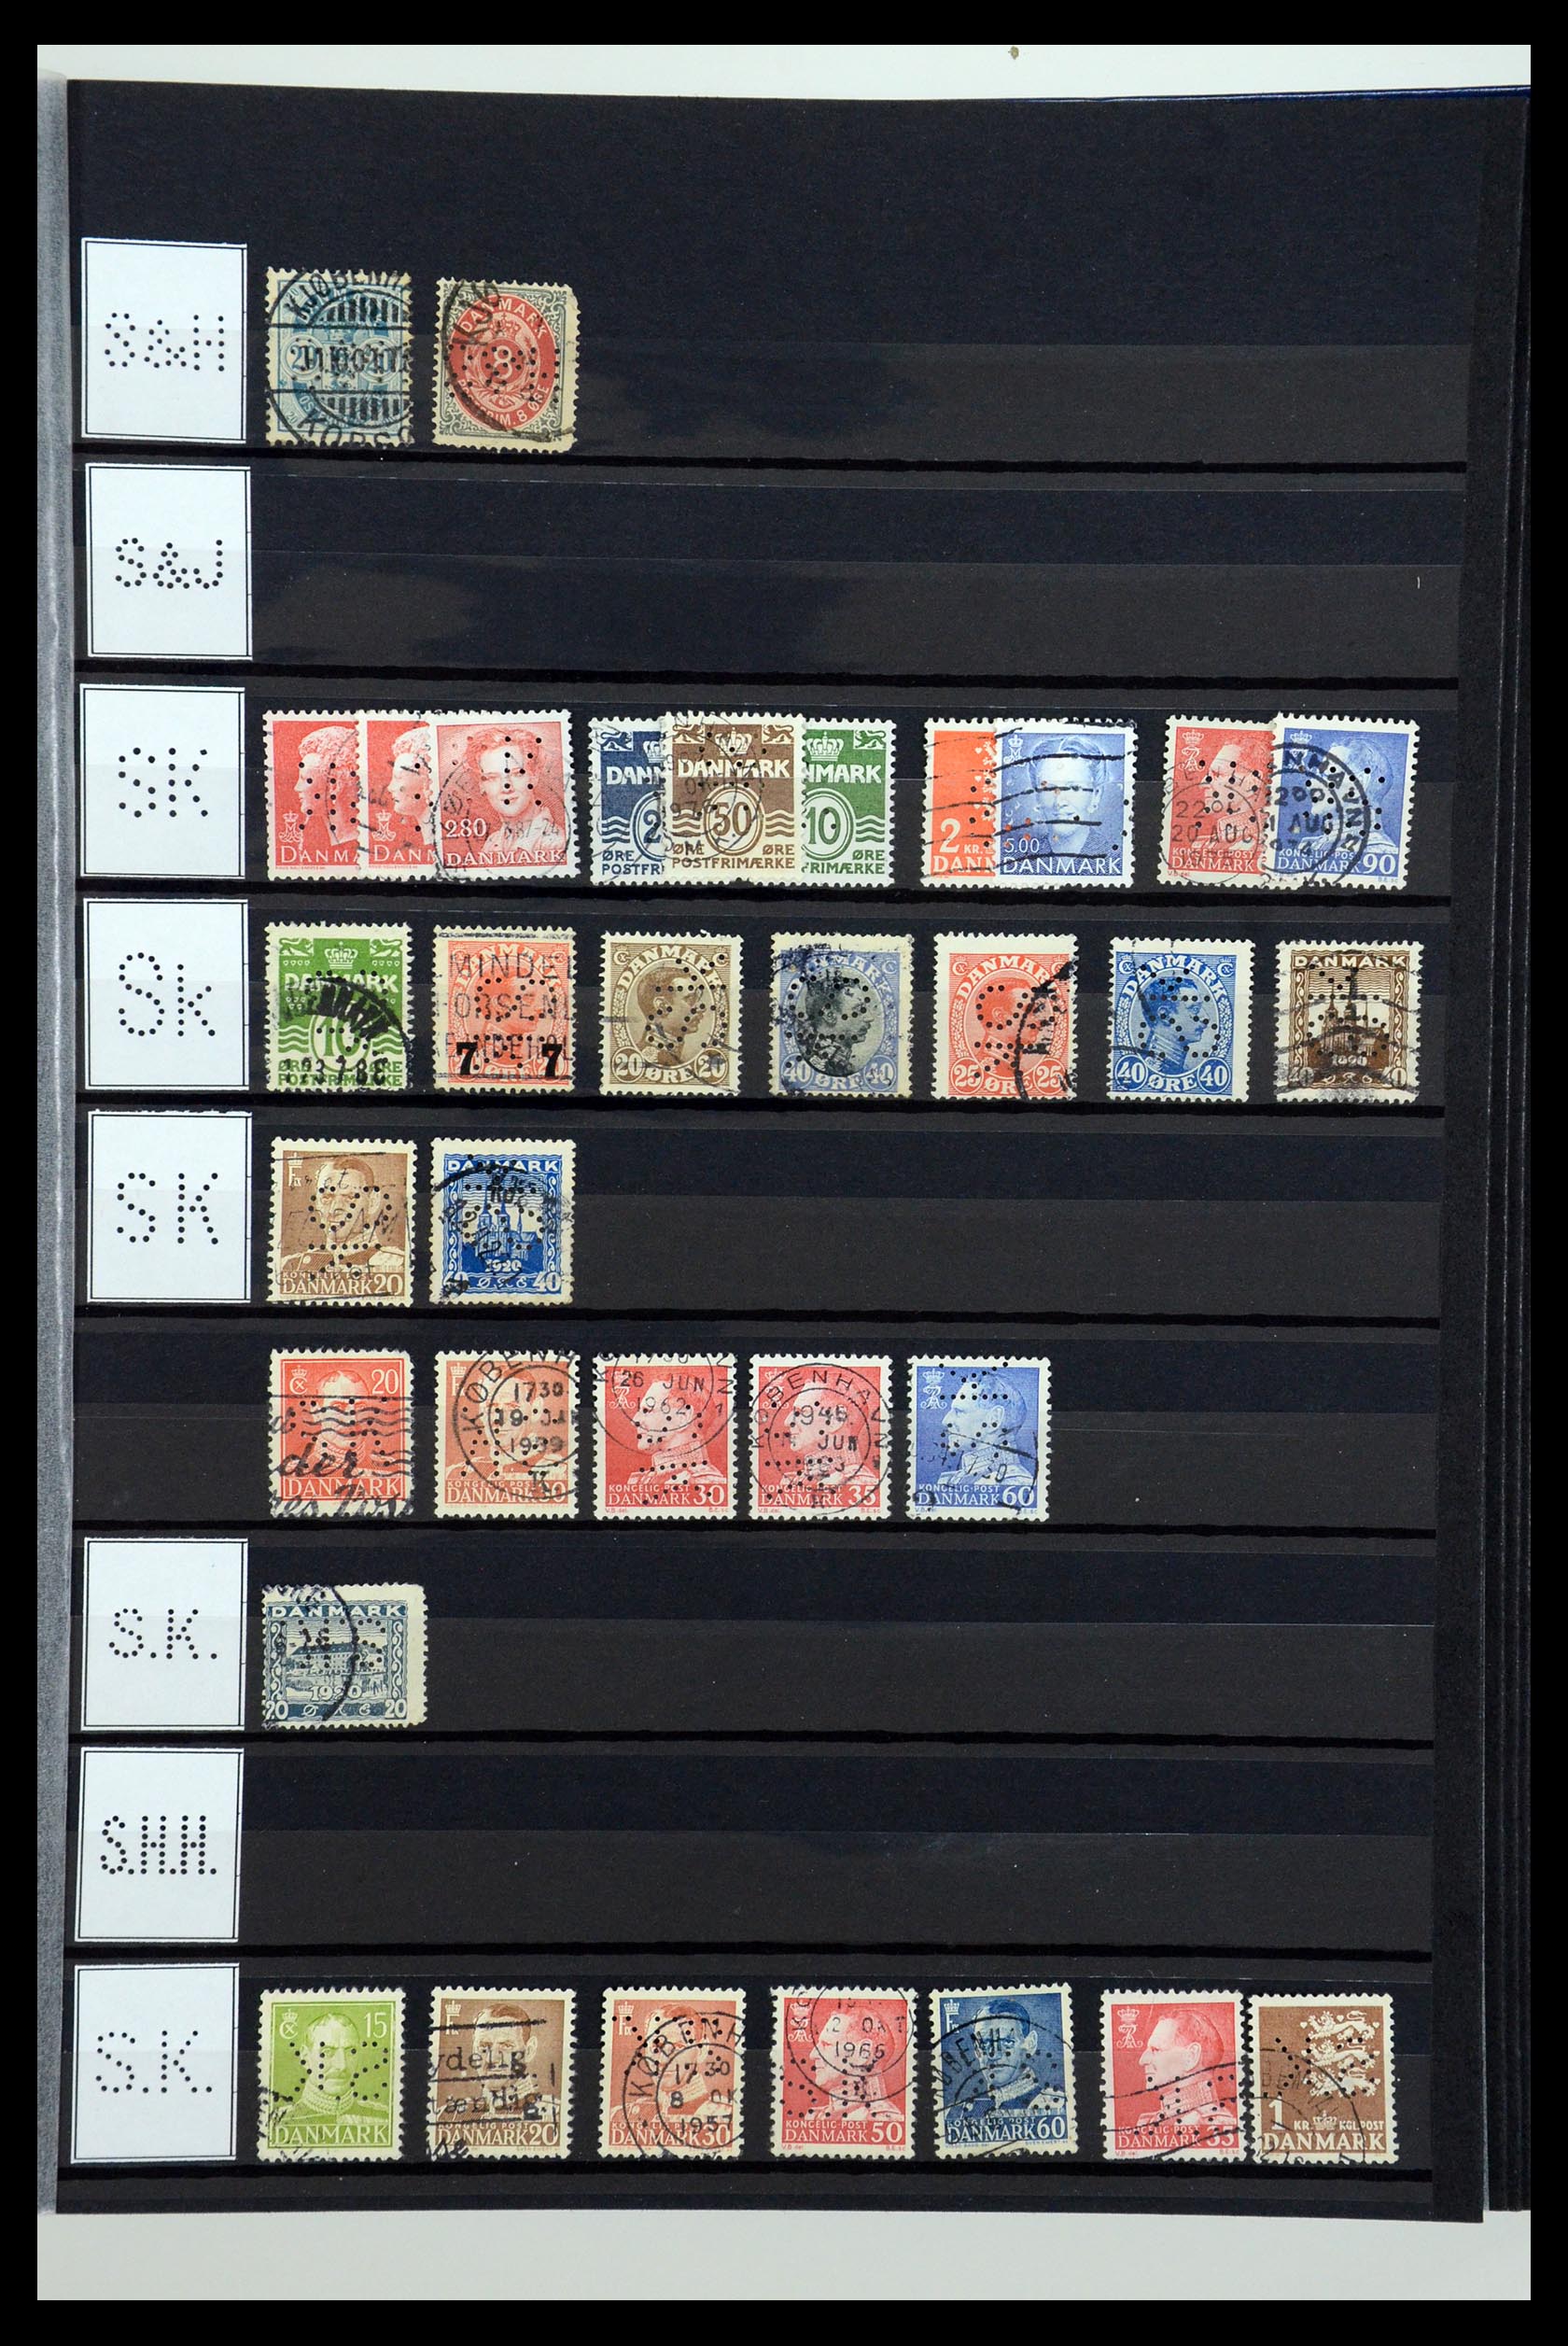 36396 207 - Stamp collection 36396 Denmark perfins.